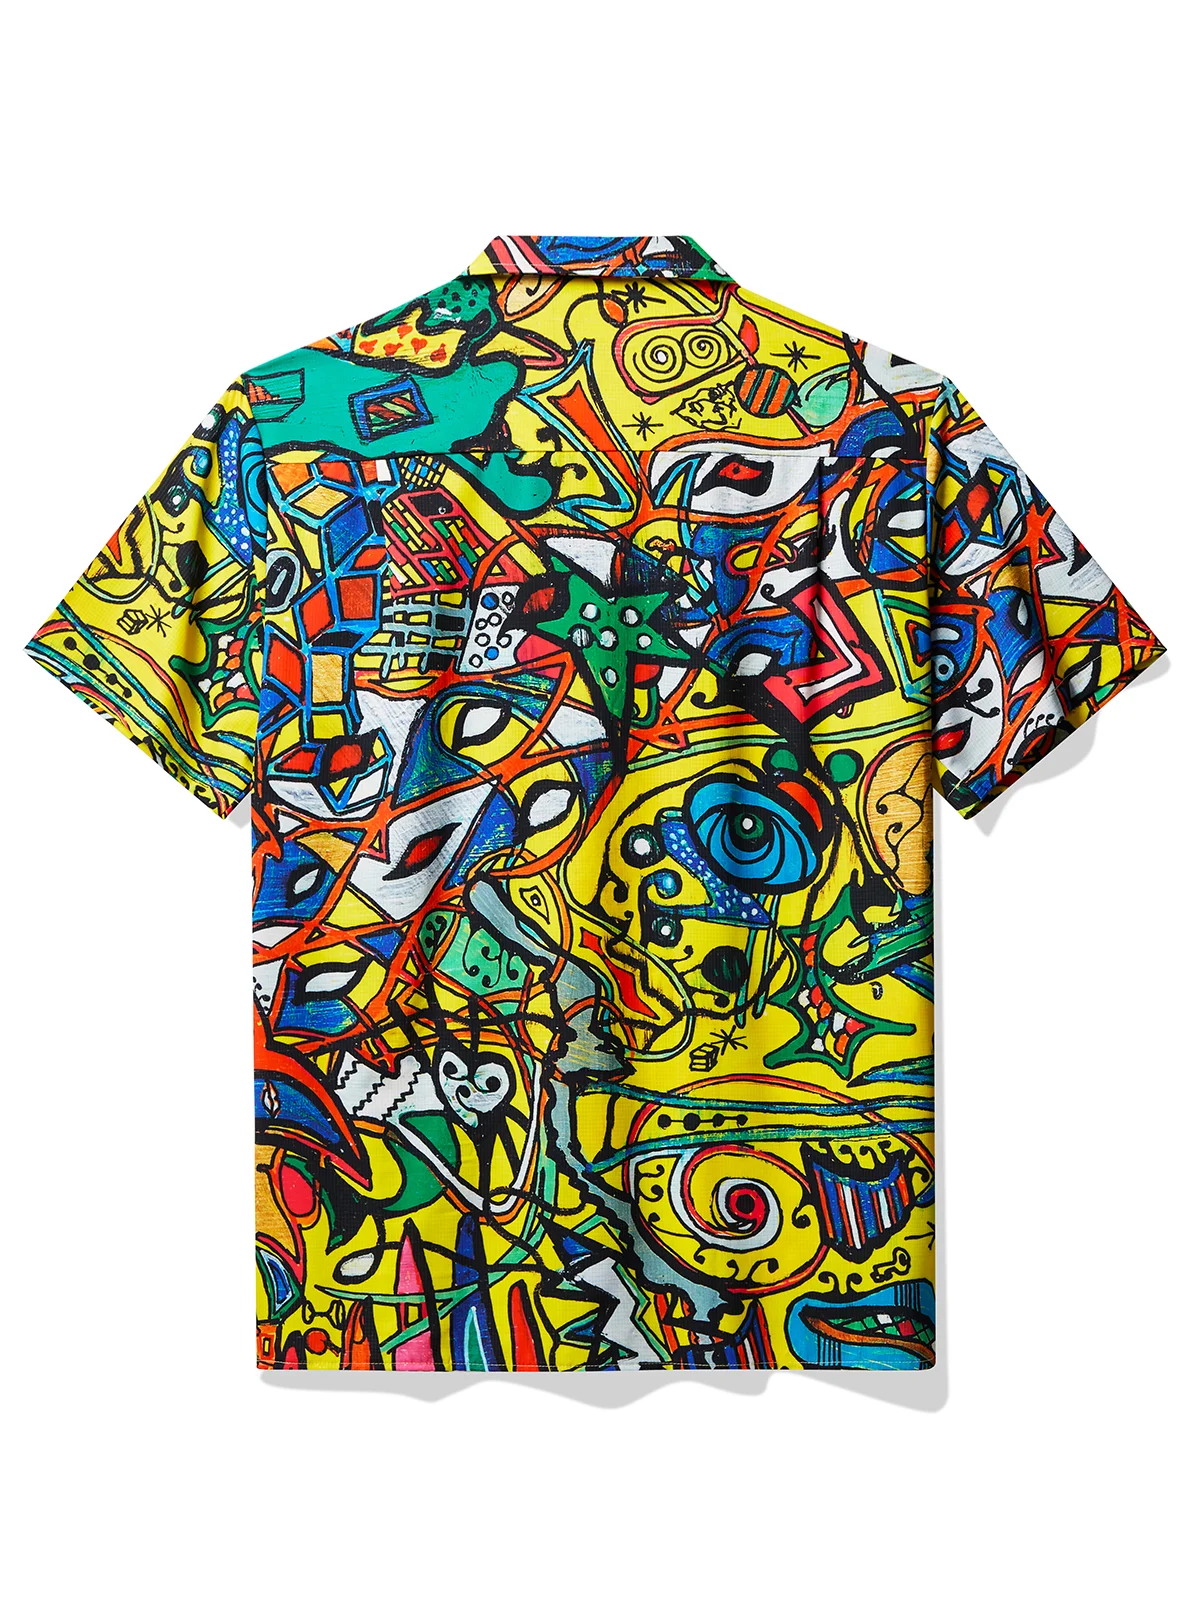 Royaura® x David Henry Lombardi San Diego Abstract Graffiti Art Vintage Hawaiian Shirt Oversize